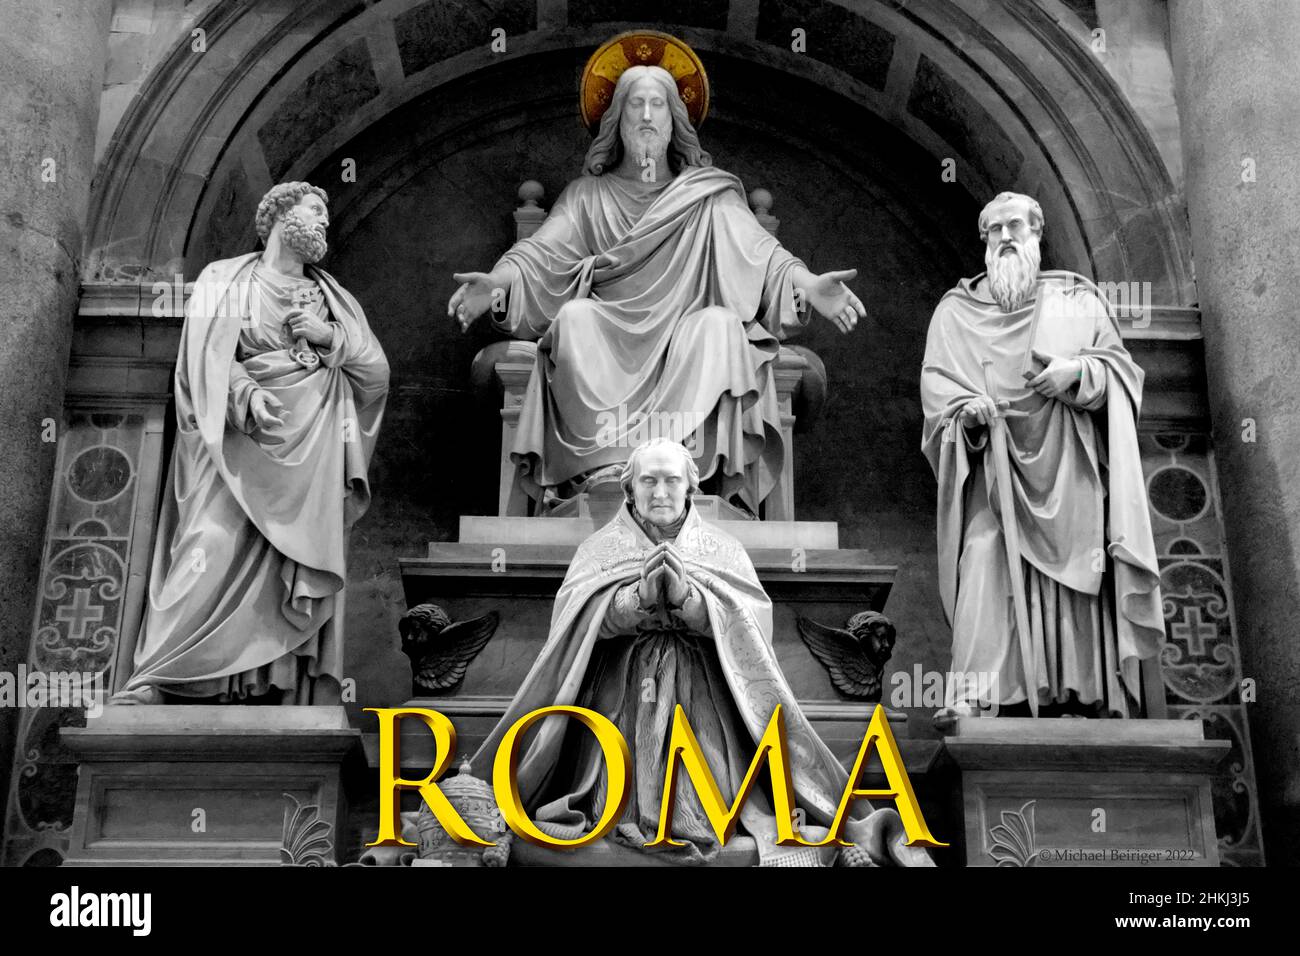 Sculpture of Jesus, Paul, and Cardinal Albanius, Vatican, Italy. Stock Photo